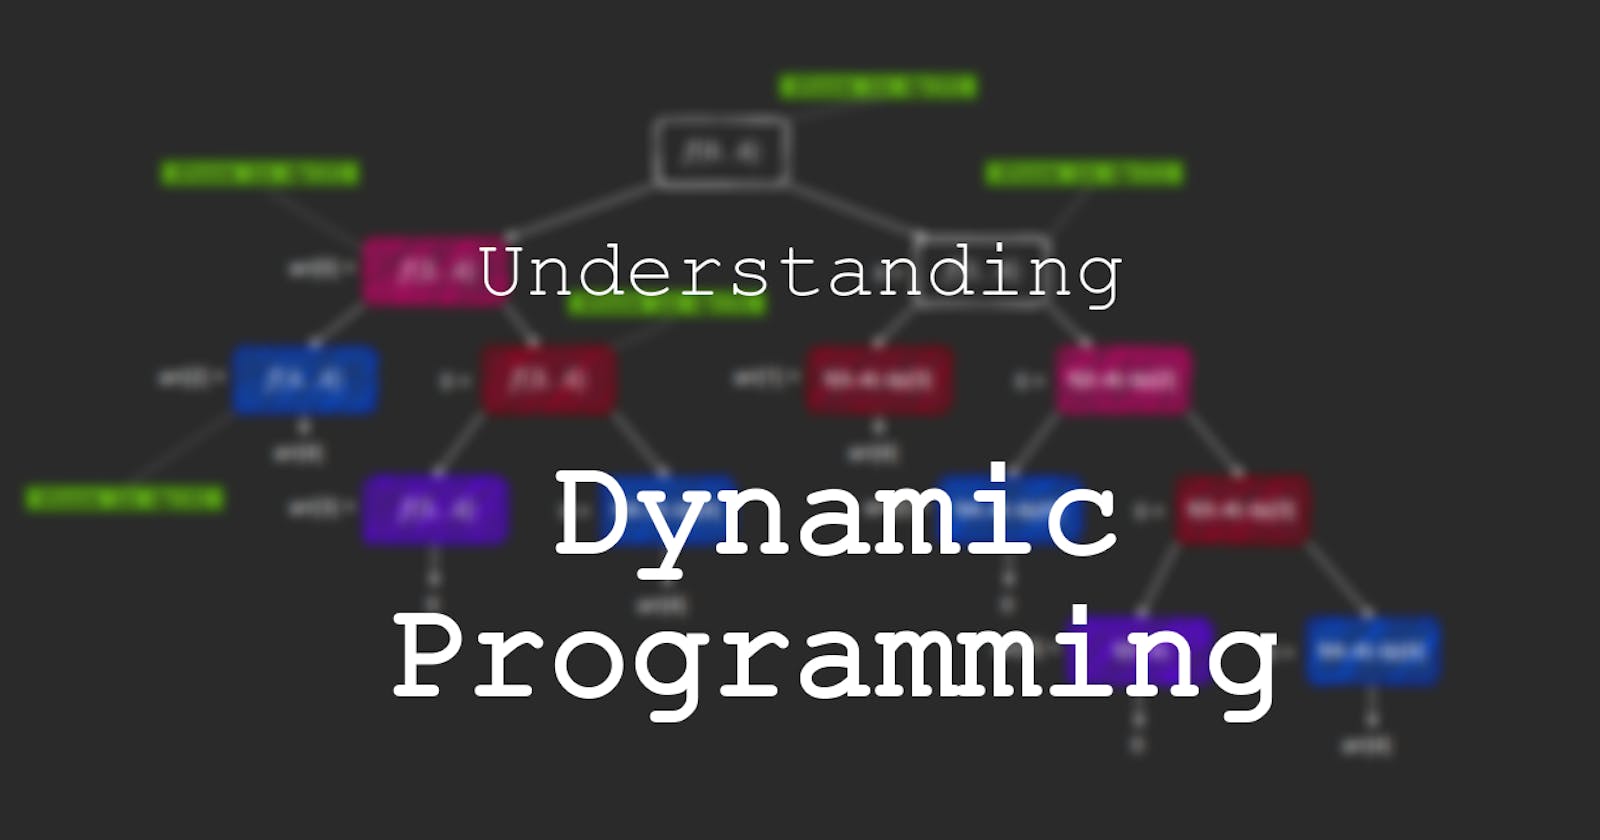 Dp Series Java - Dynamic Programming an Introduction